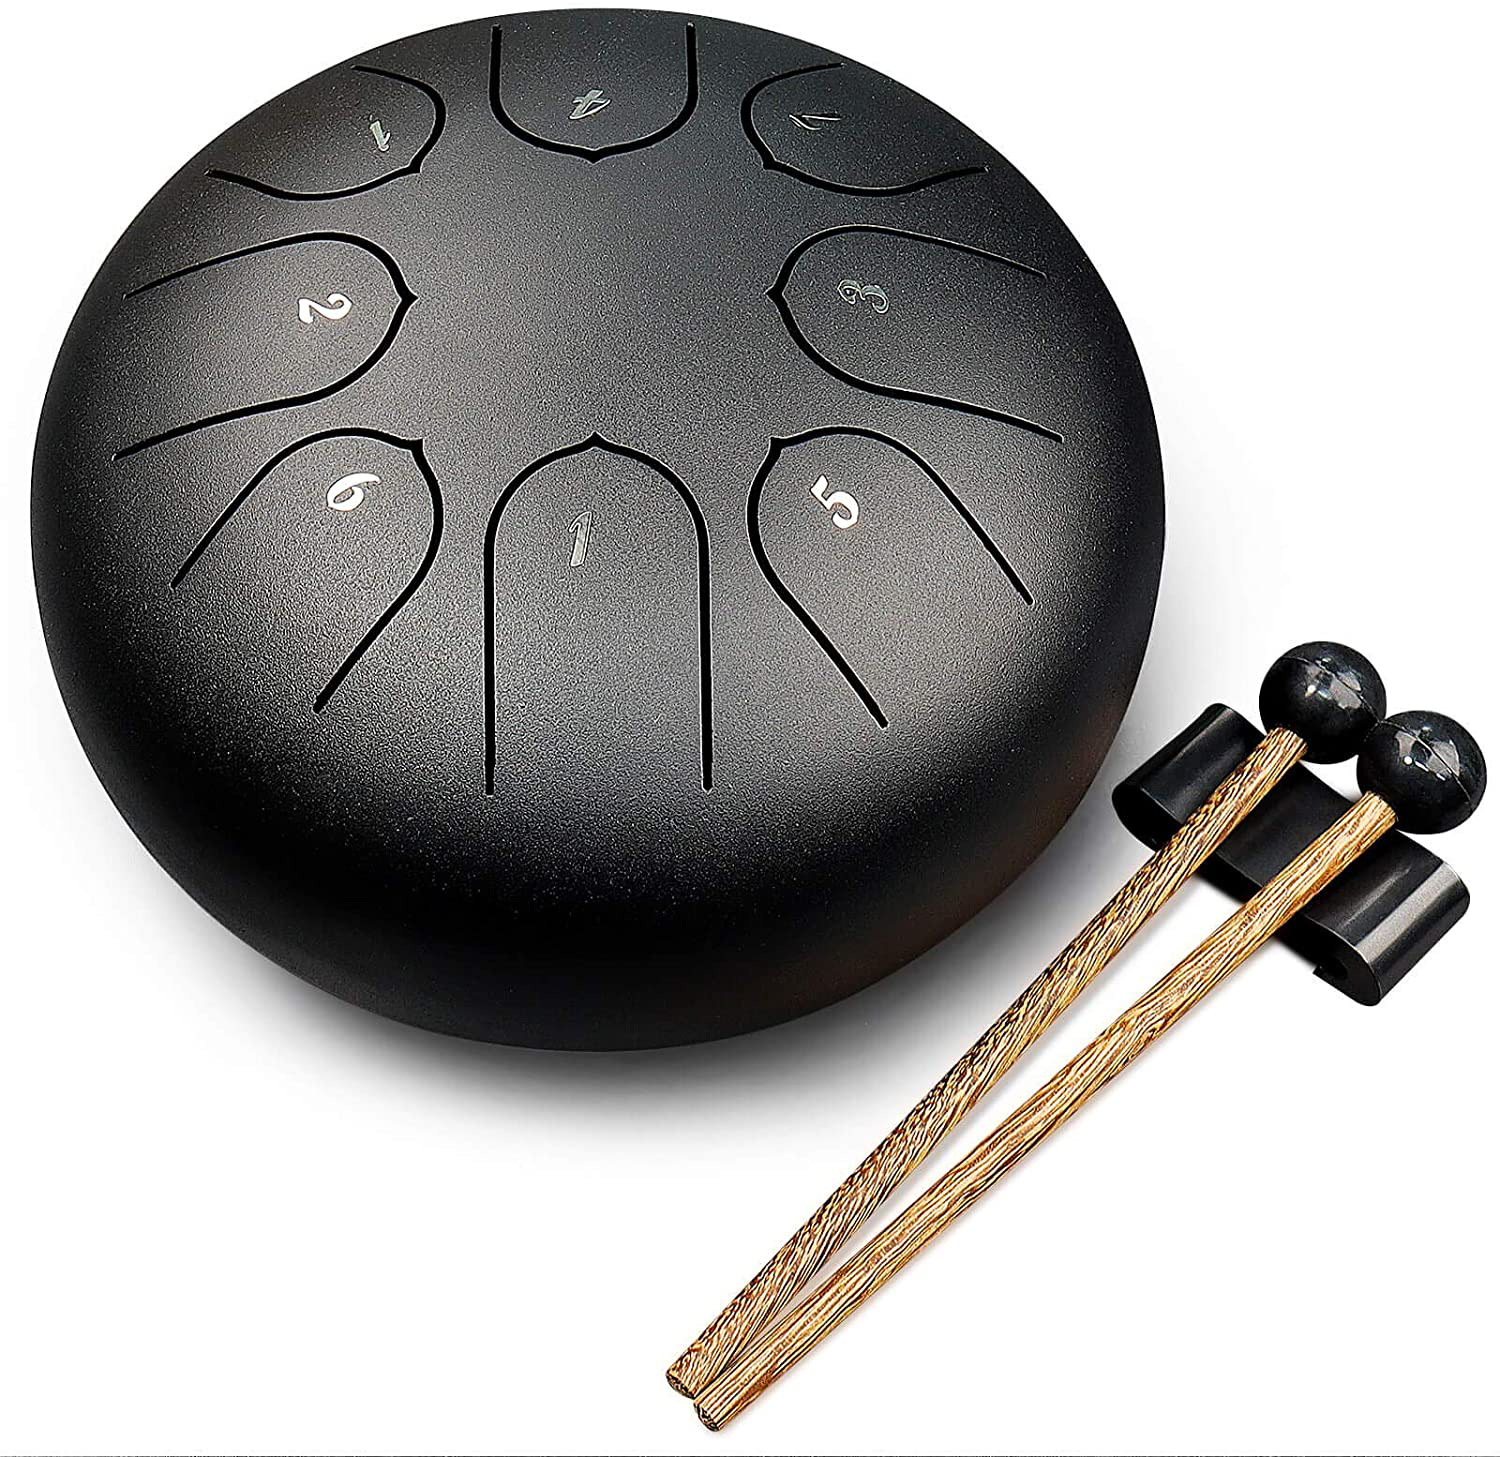 Lronbird Steel Tongue Drum Kit, 8-notes-6 Inch C-key Musical Drums Set - Handpan